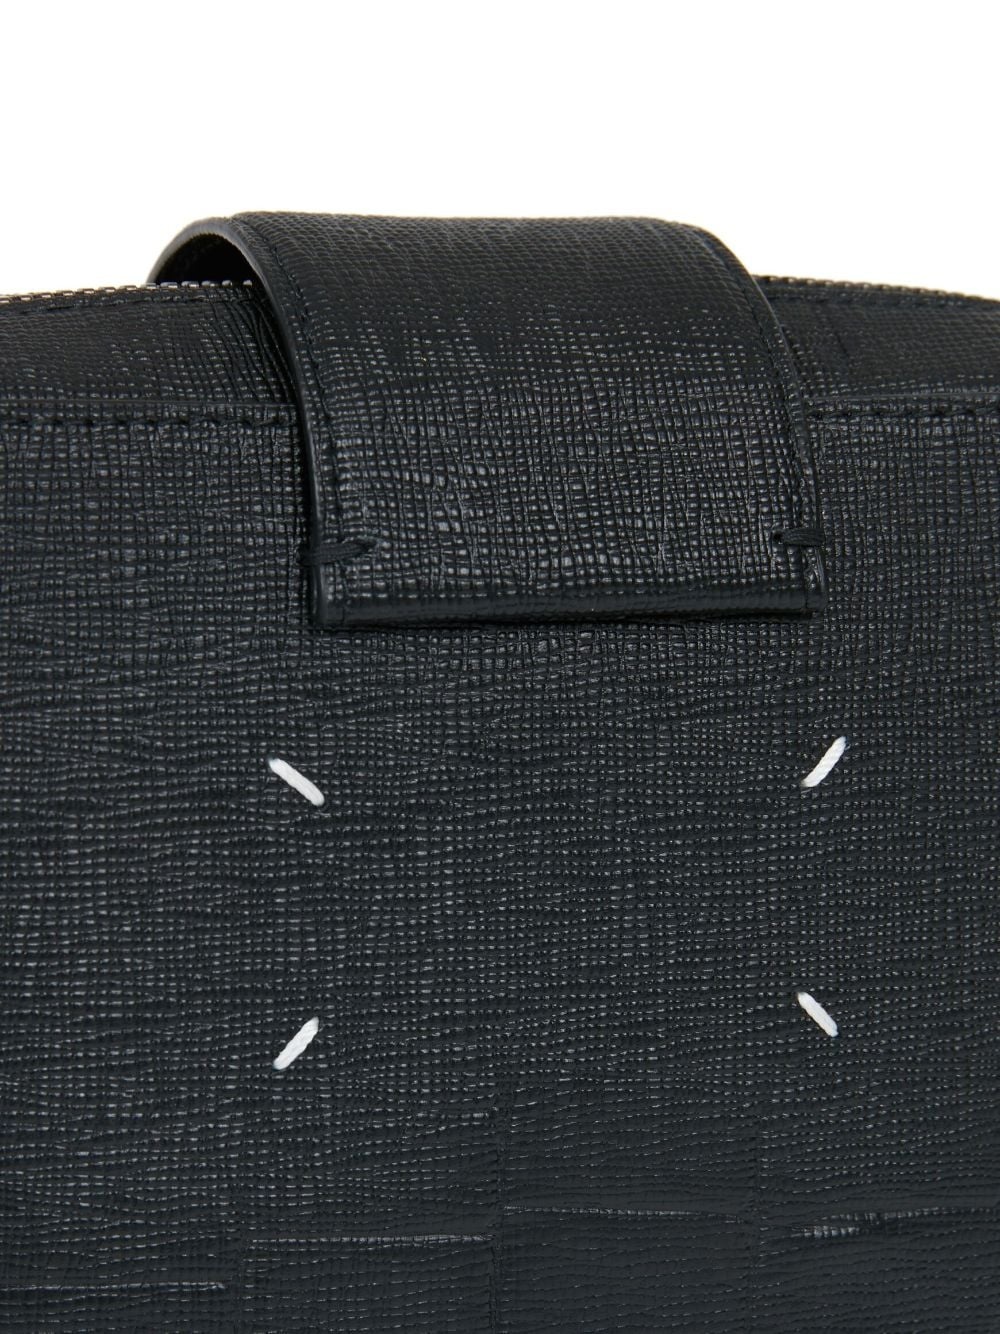 four-stitch leather shoulder bag - 7